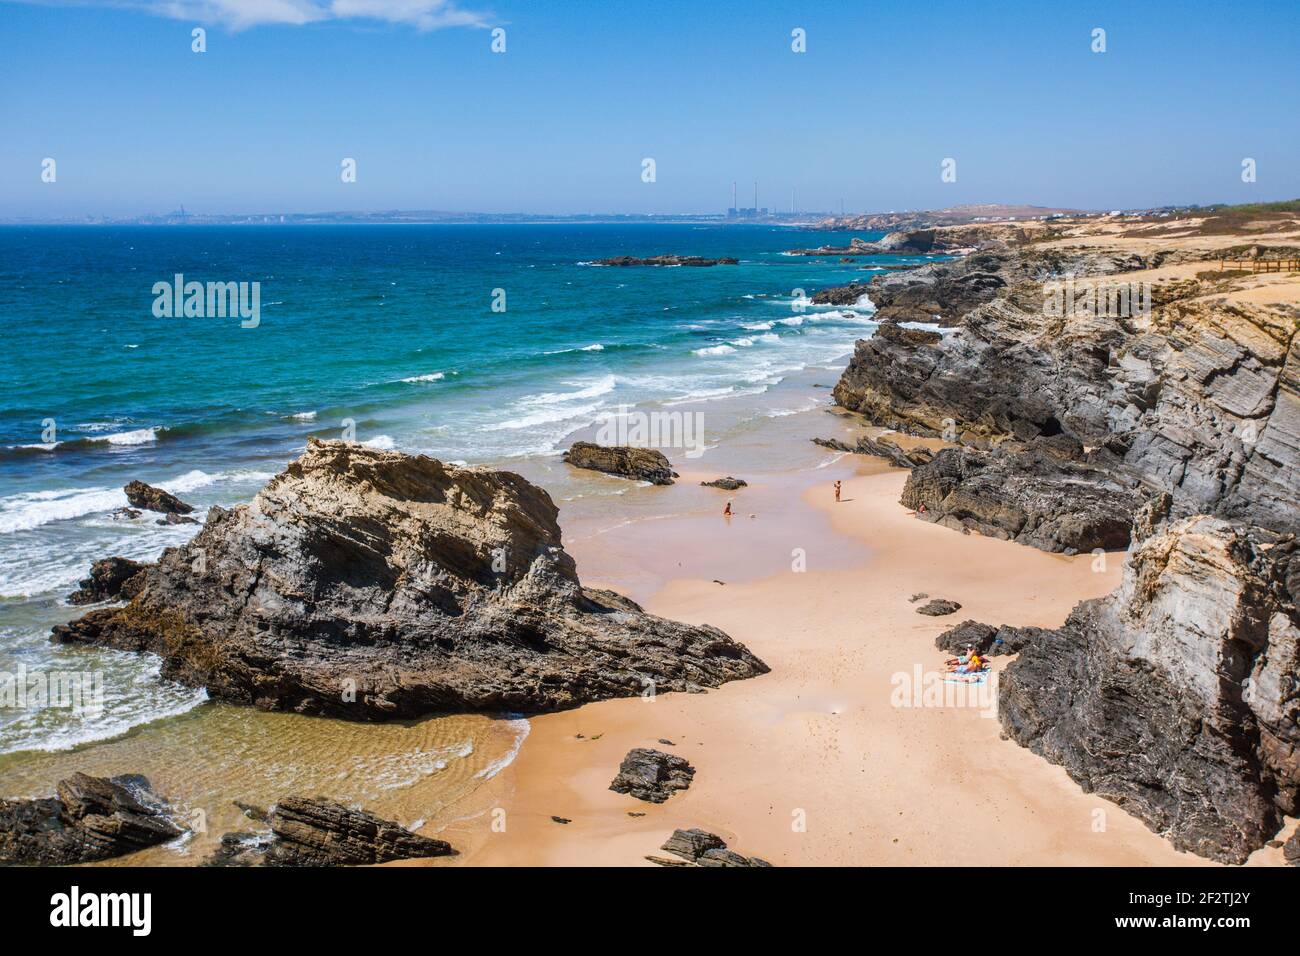 Der wilde Strand von Porto Covo an der Atlantikküste, Alentejo - Portugal. Stockfoto